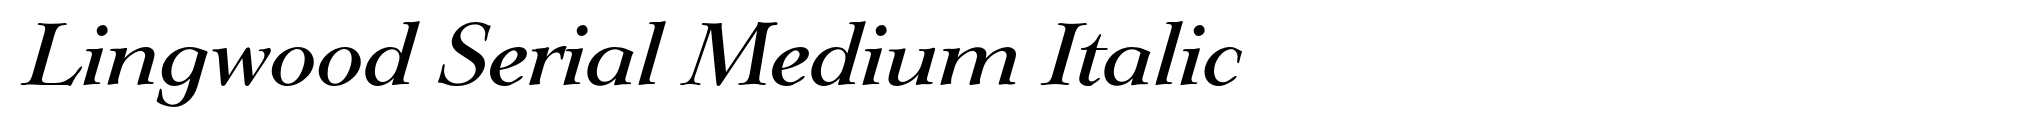 Lingwood Serial Medium Italic image